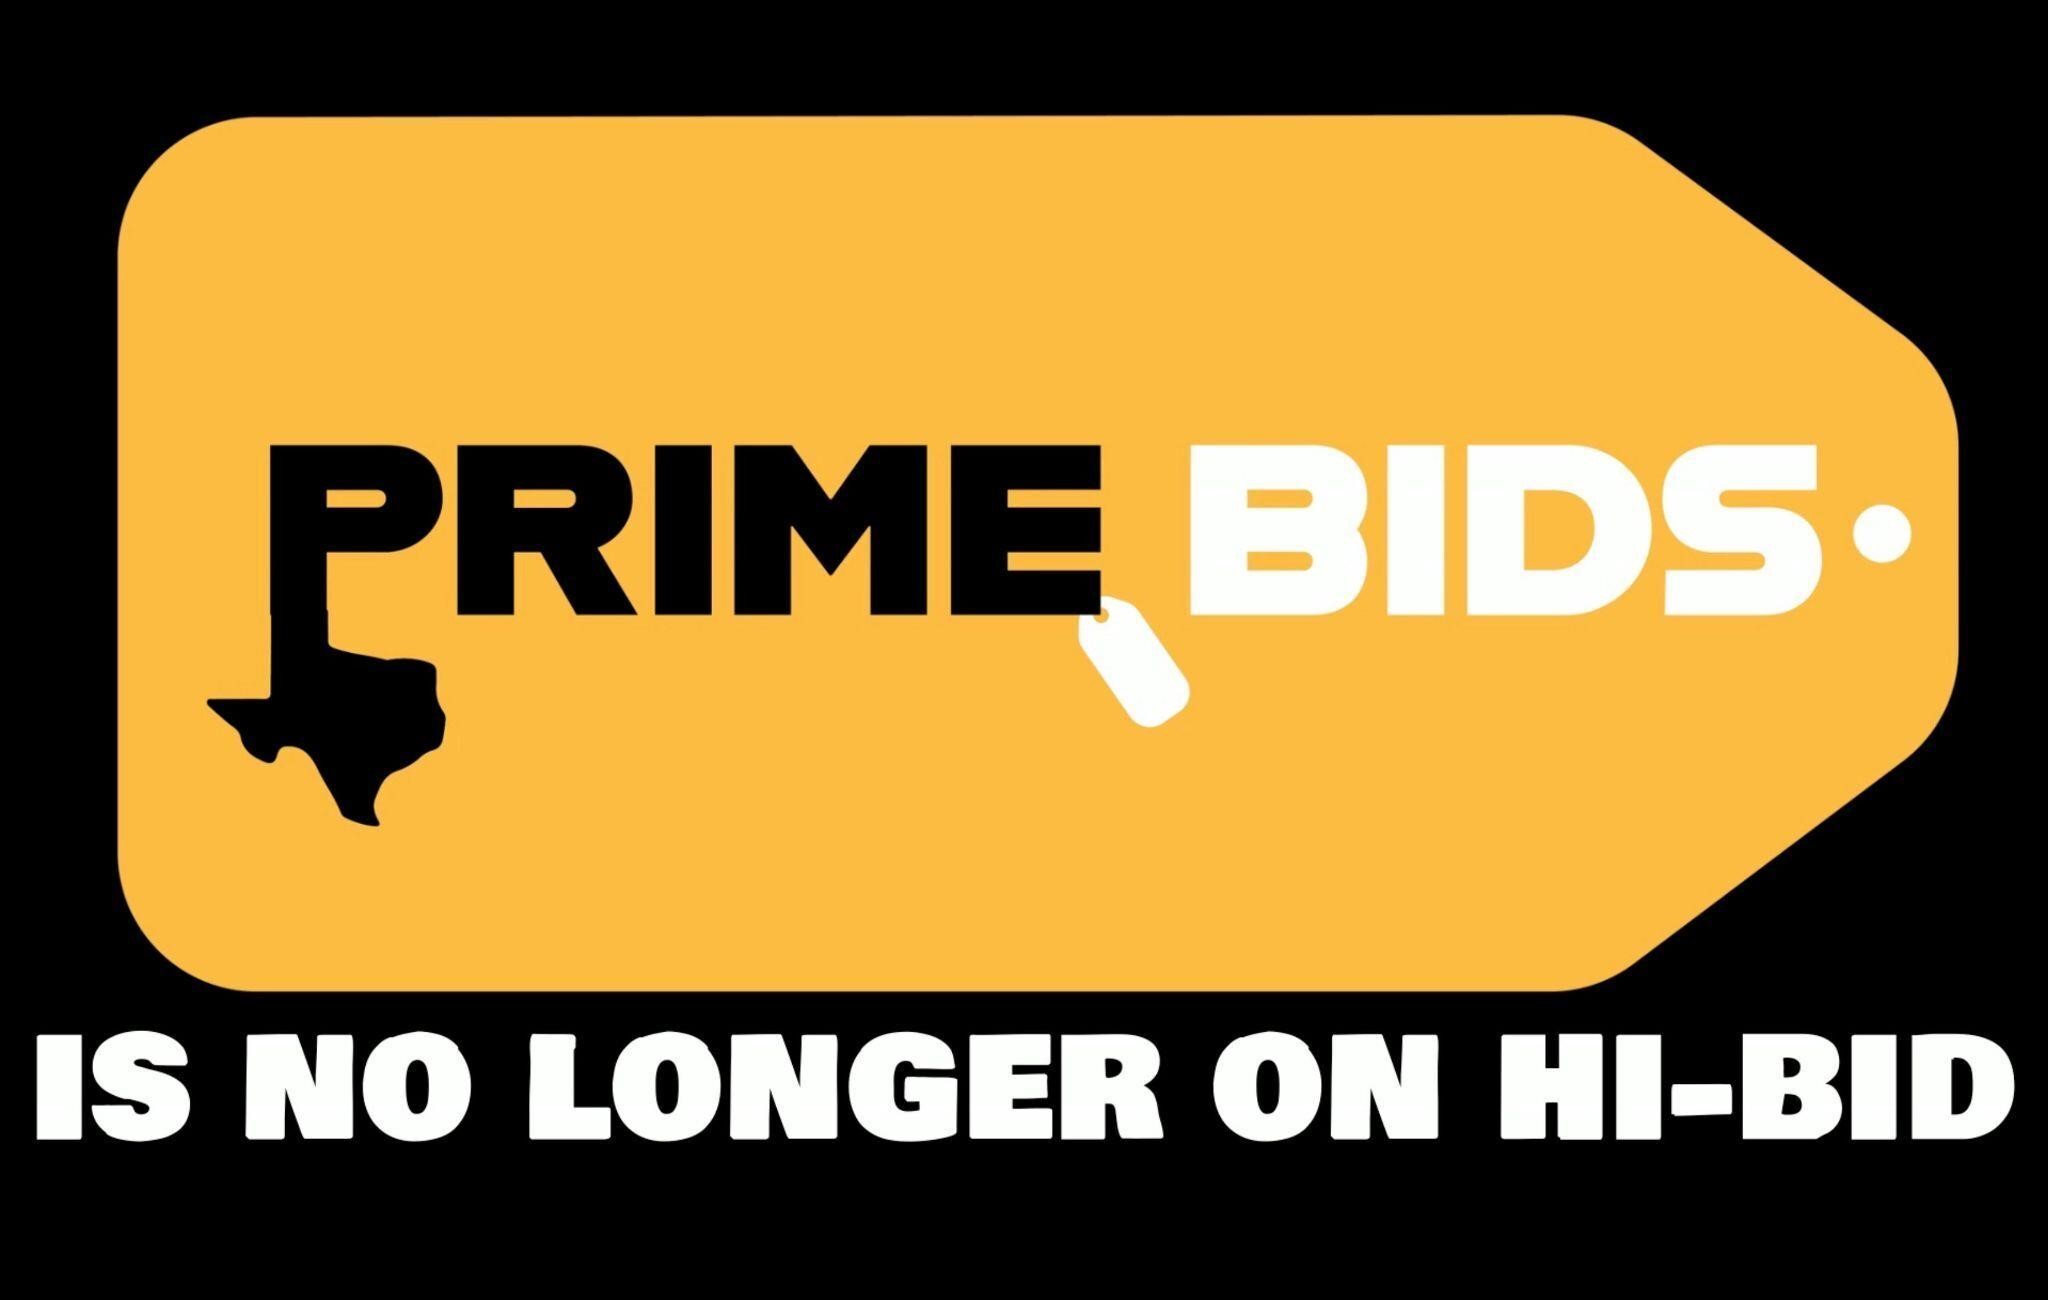 Prime Bids HAS MOVED WEBSITES